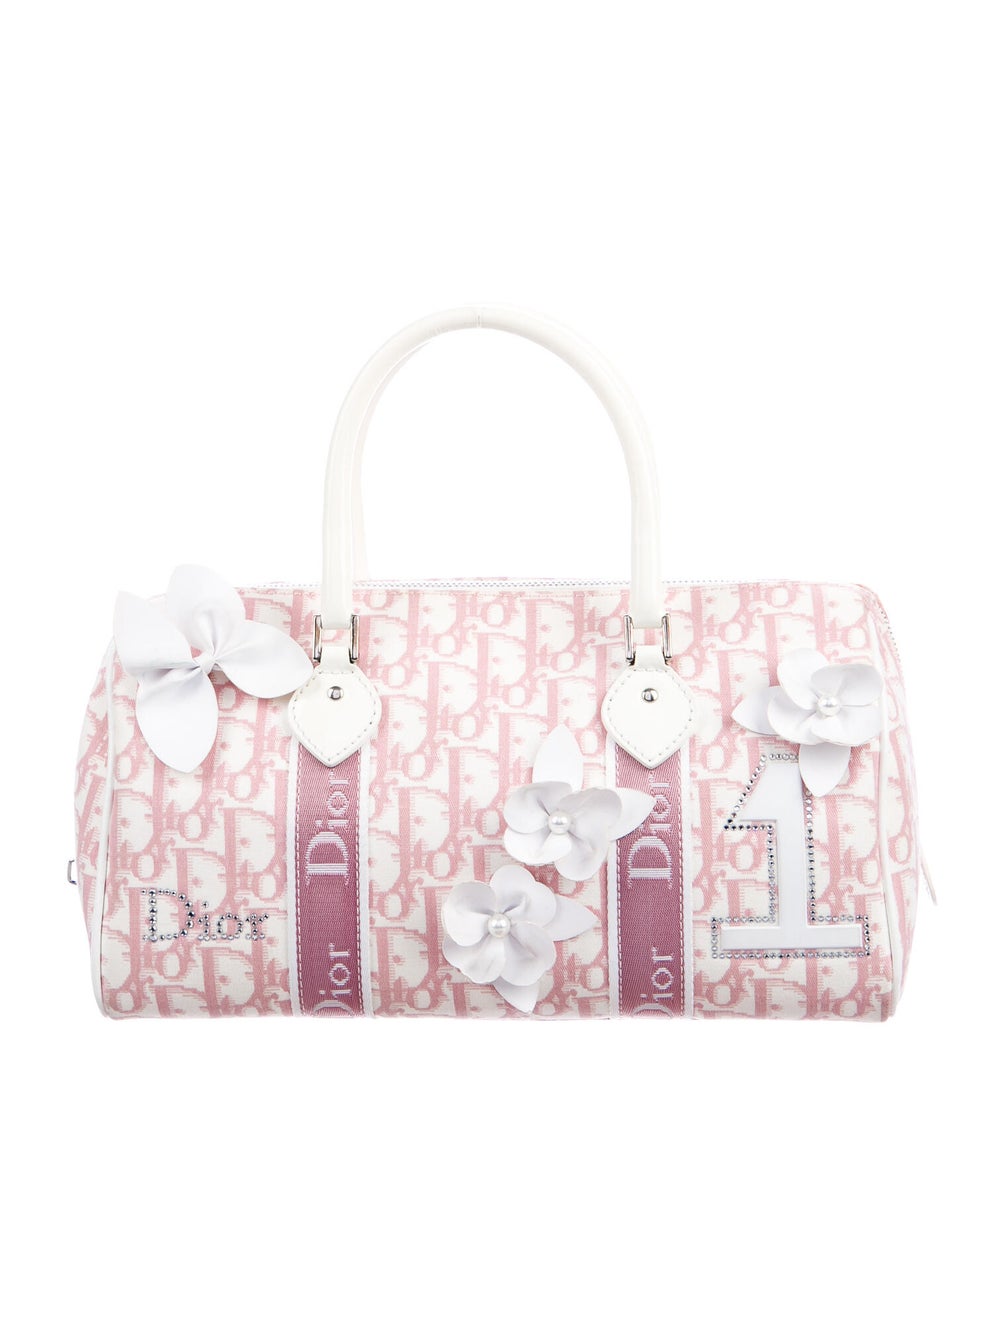 Girly Monogram Bag by Dior